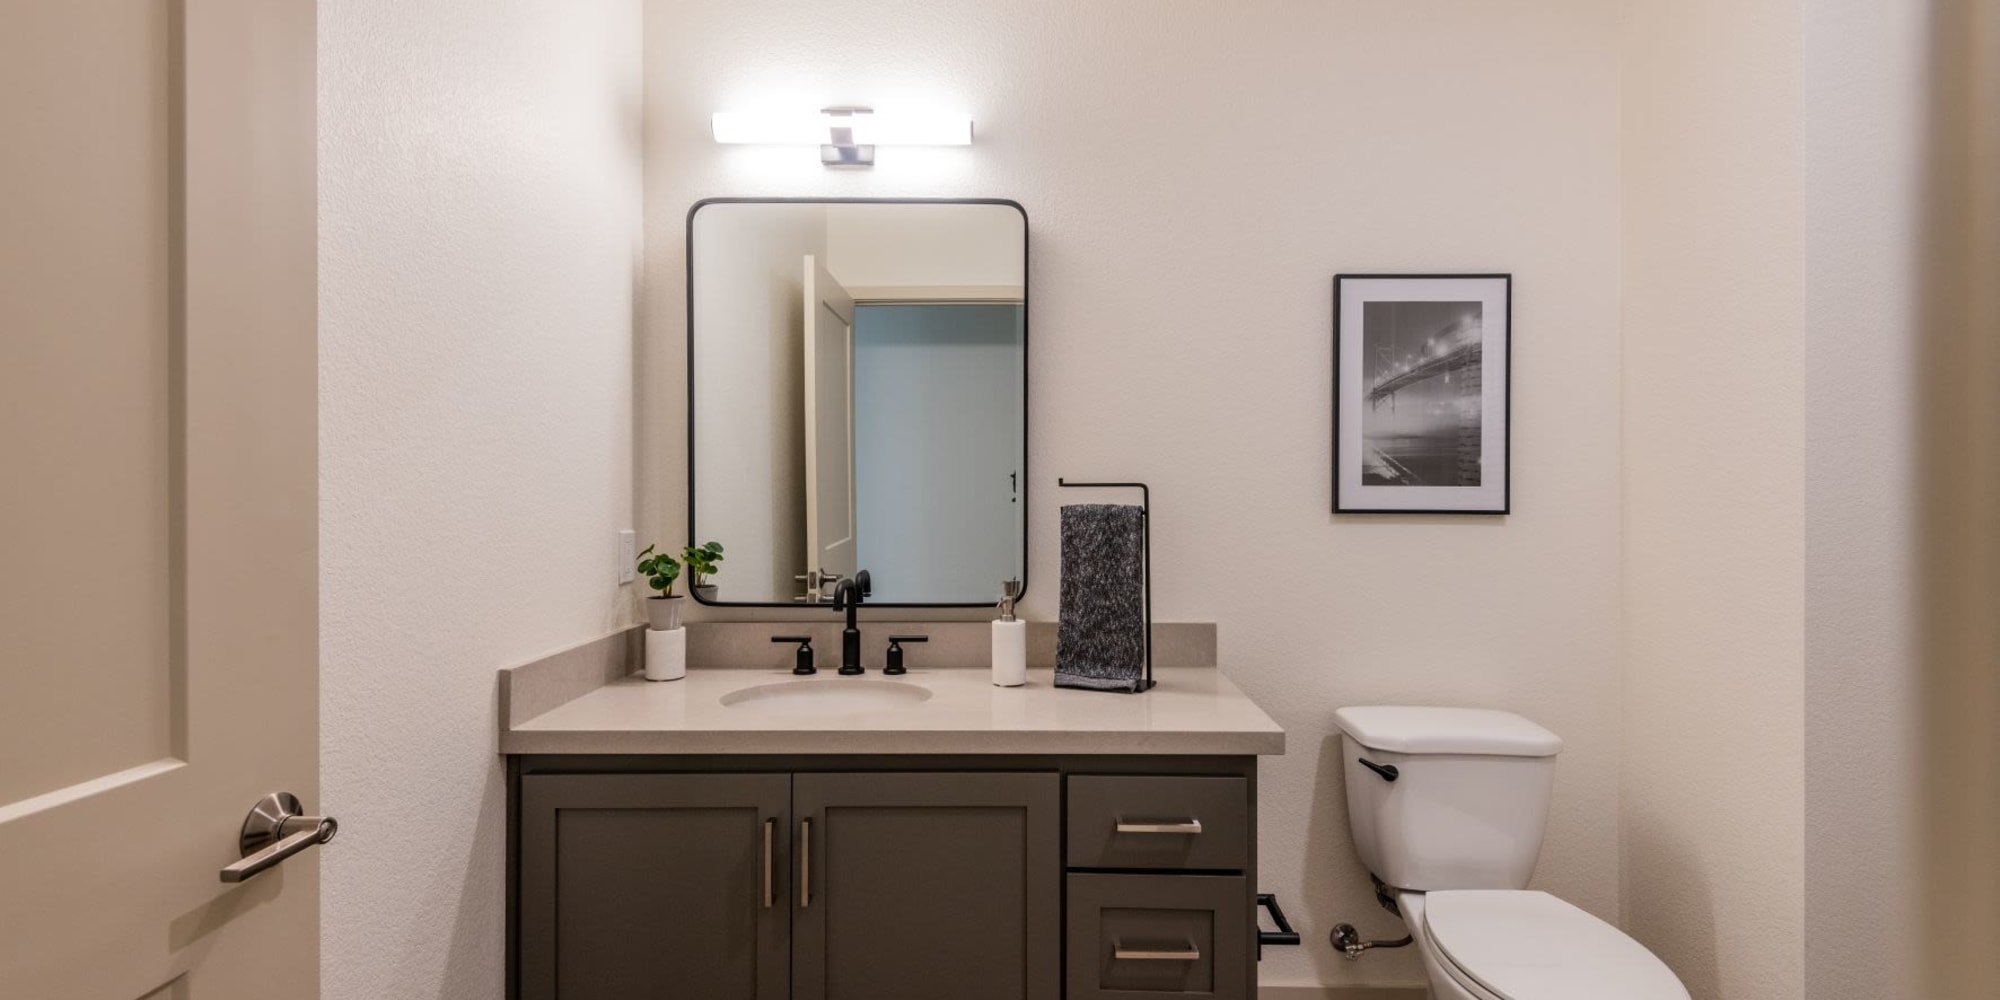 Bathroom at Towne Centre Apartments in Lathrop, California